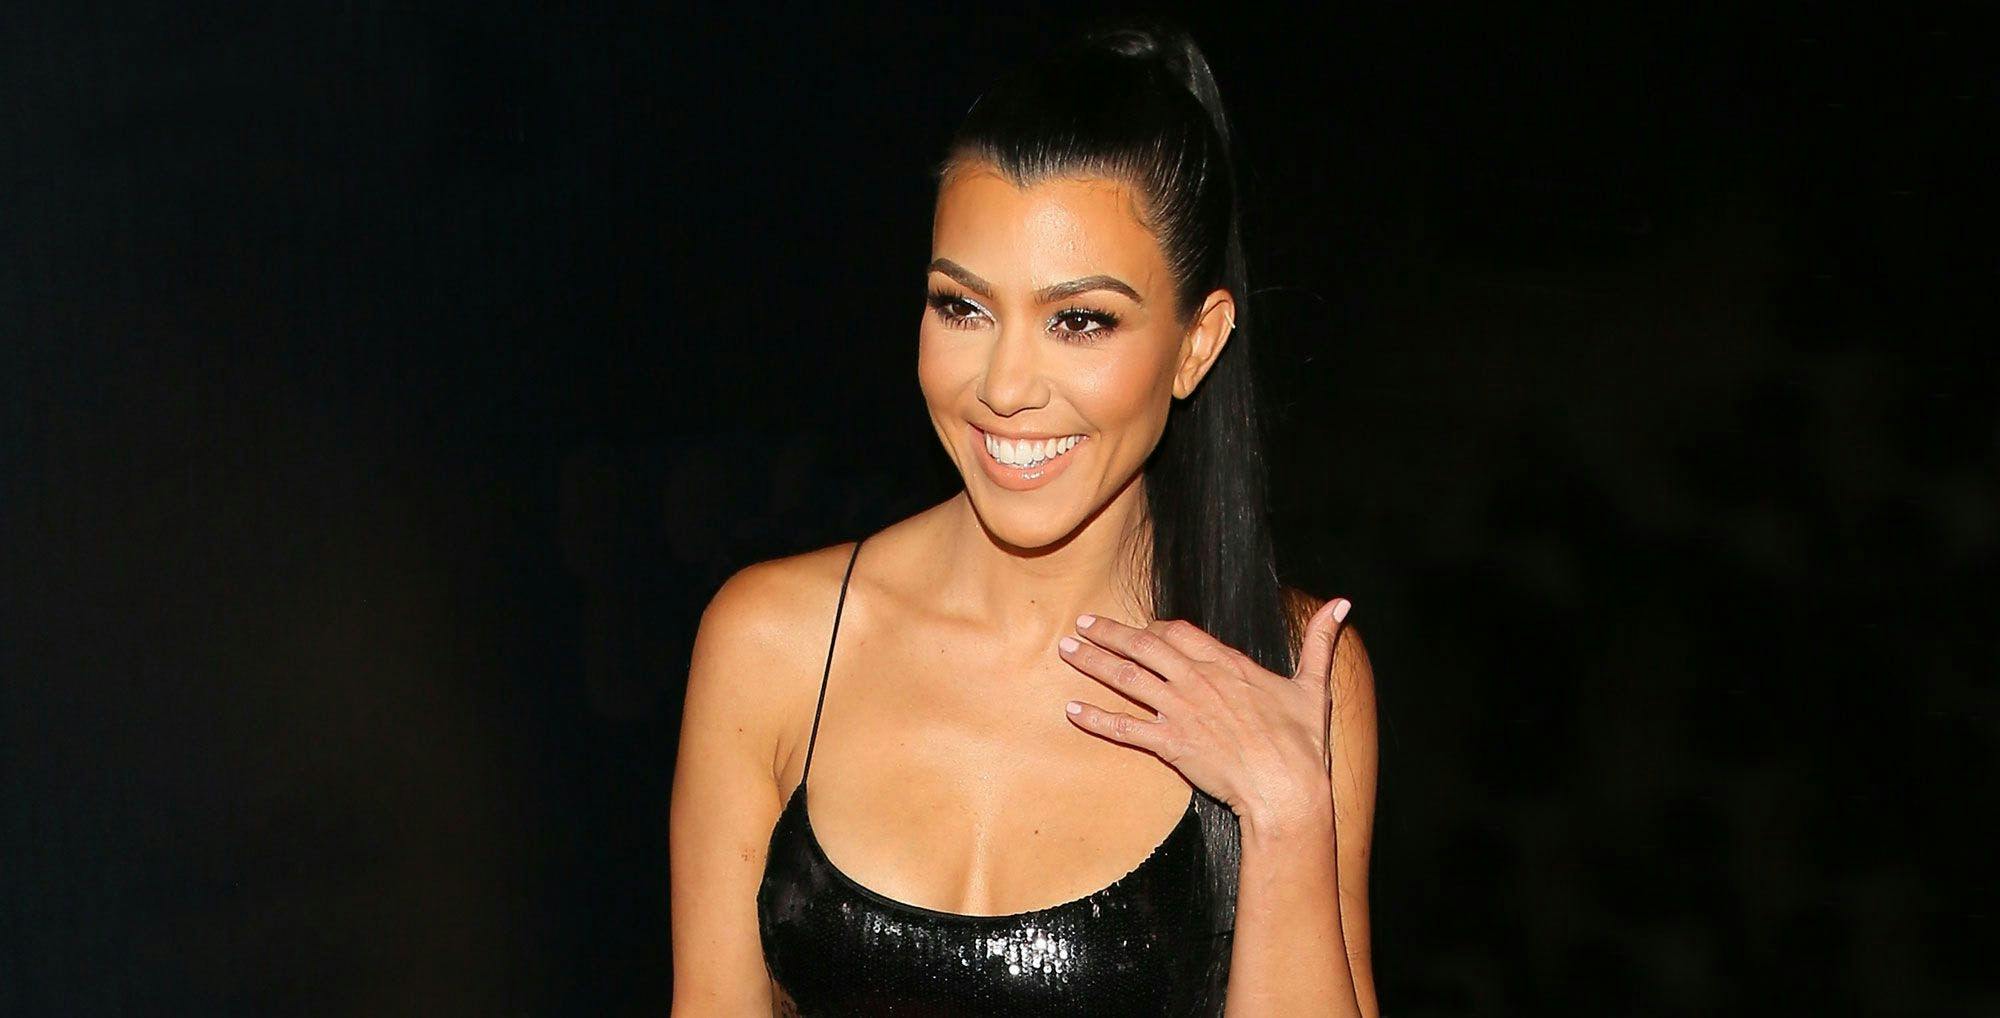 Kourtney Kardashian wearing a black dress and smiling